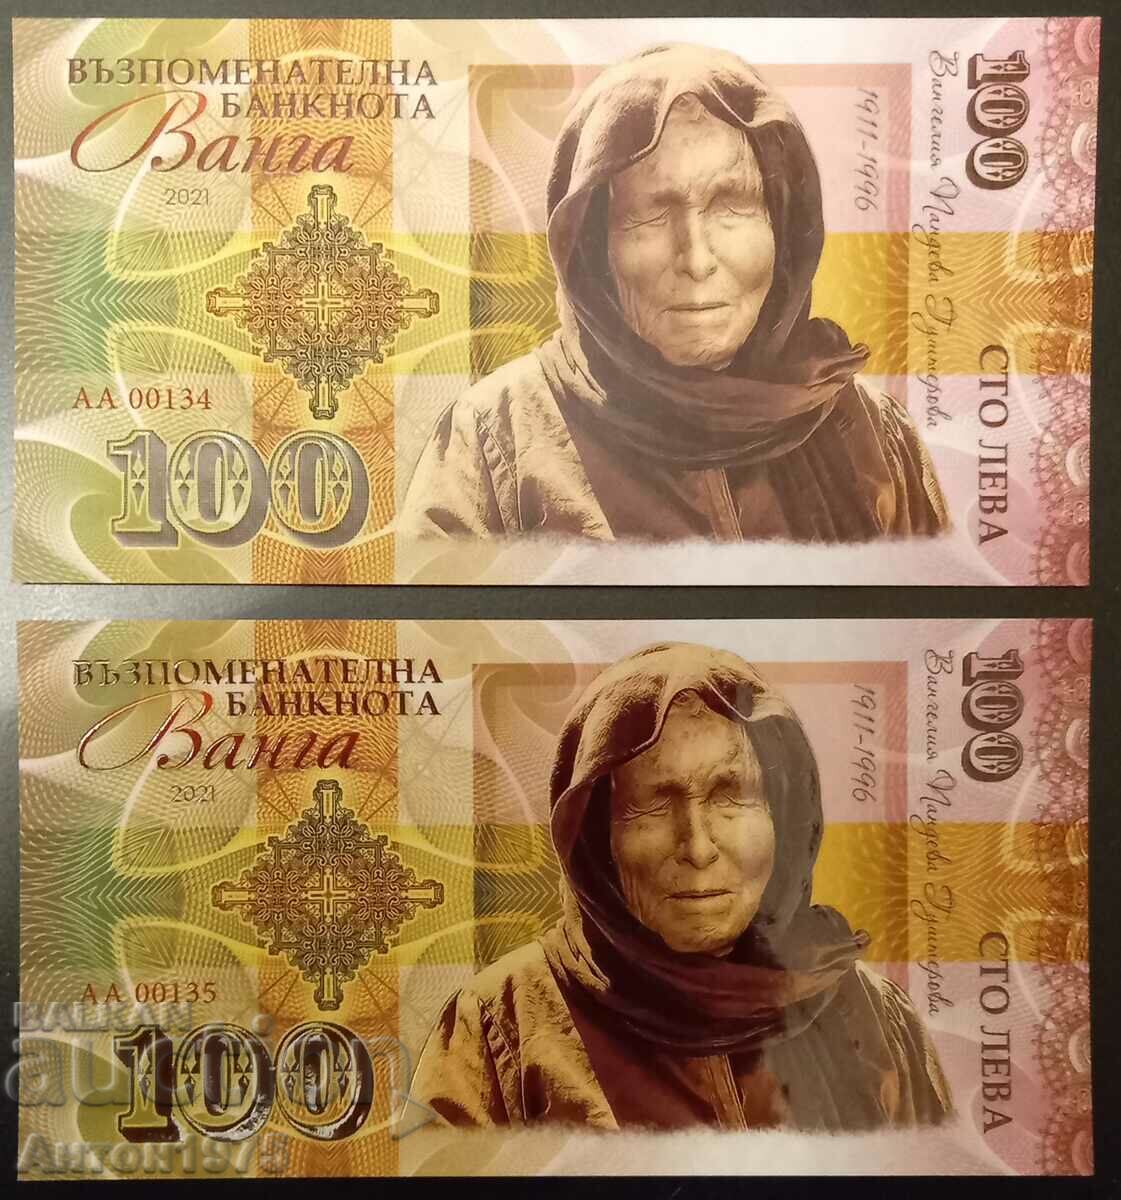 Commemorative banknote 100 BGN Vanga